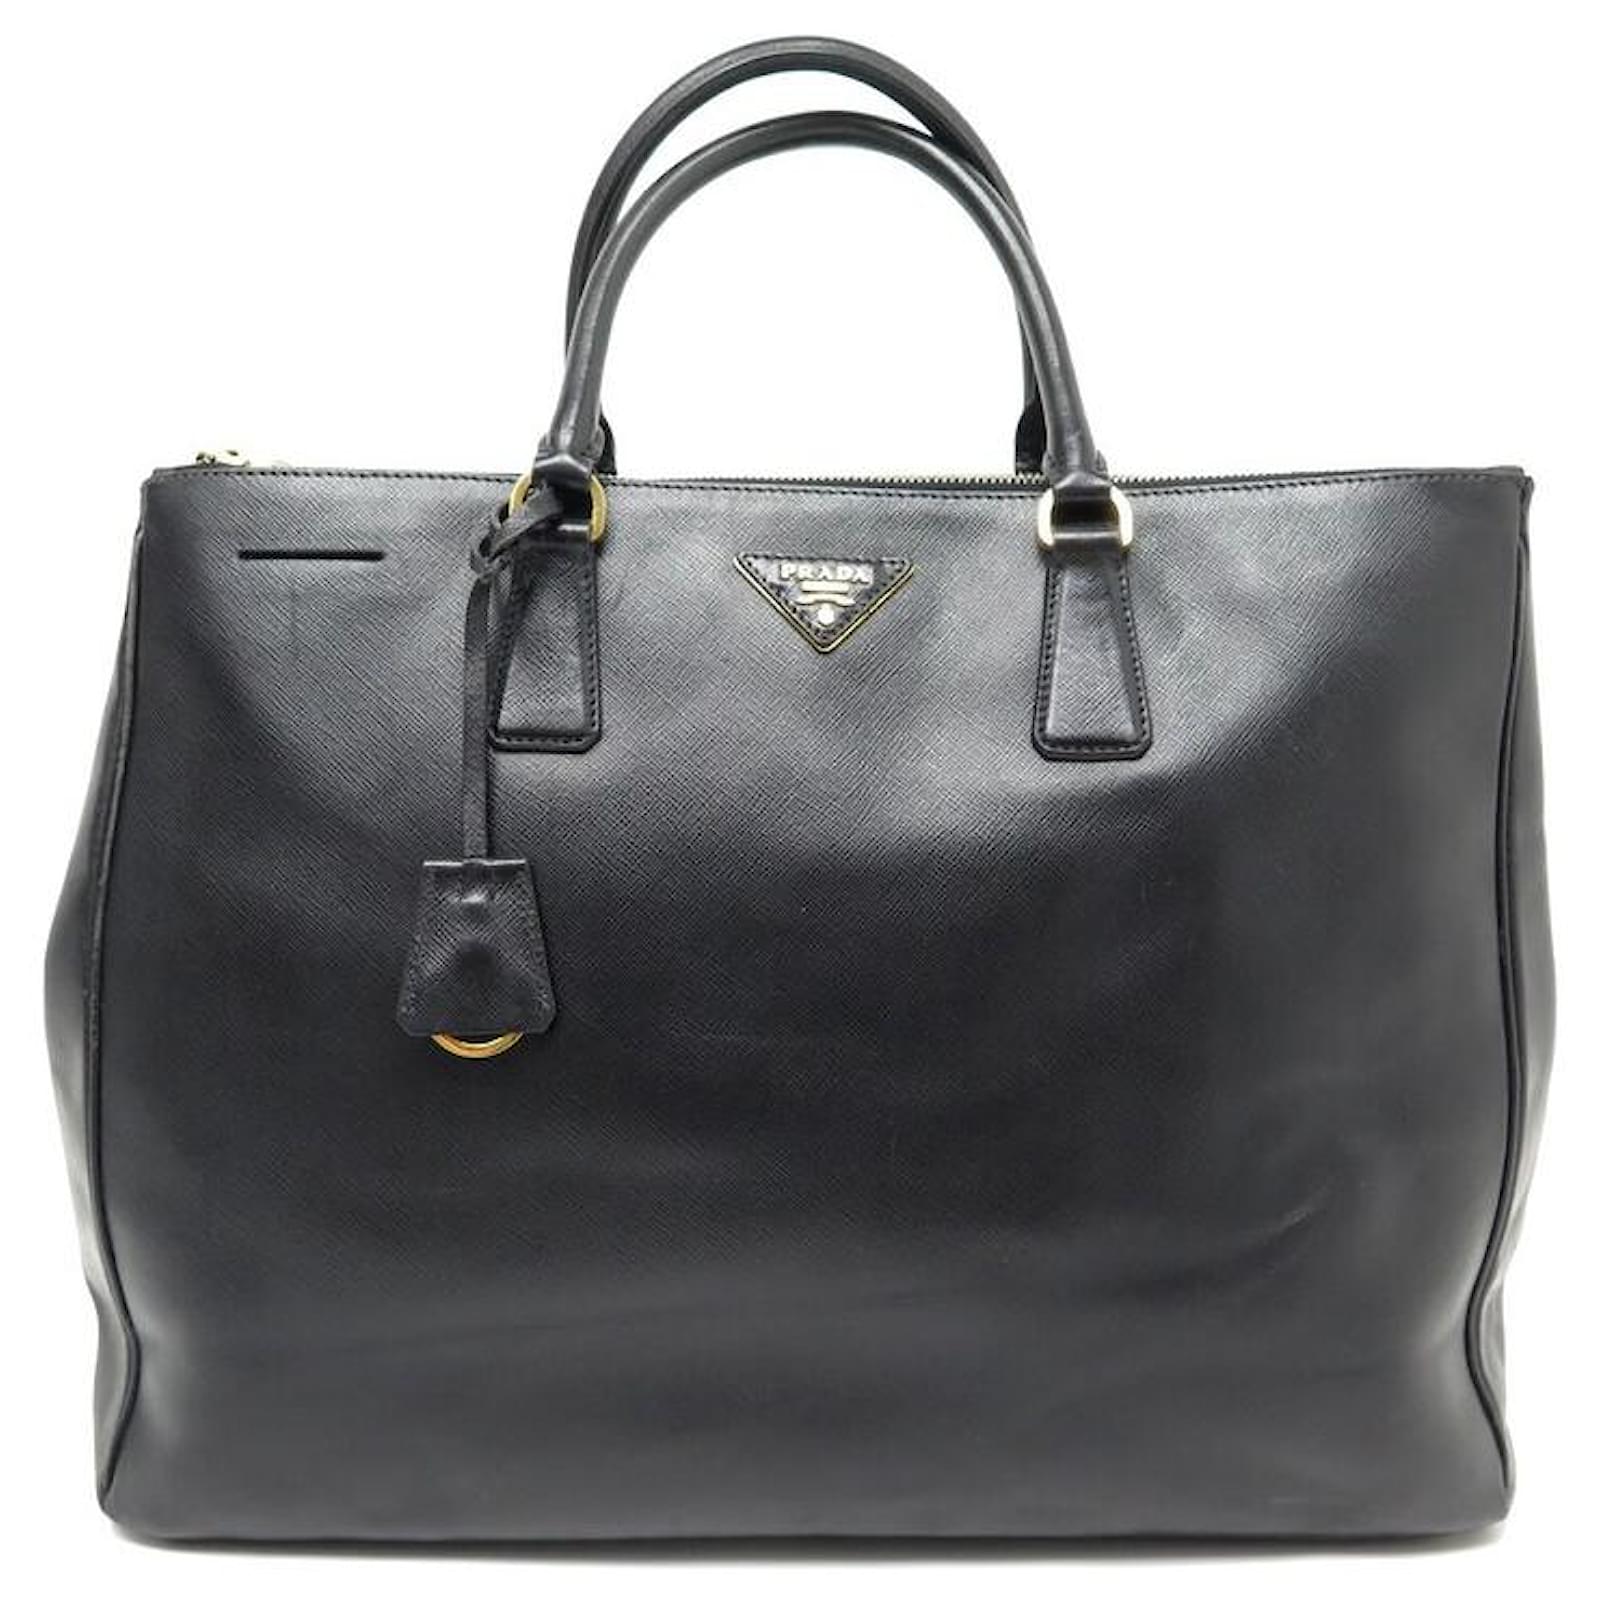 Prada galleria black saffiano leather bag Lux tote